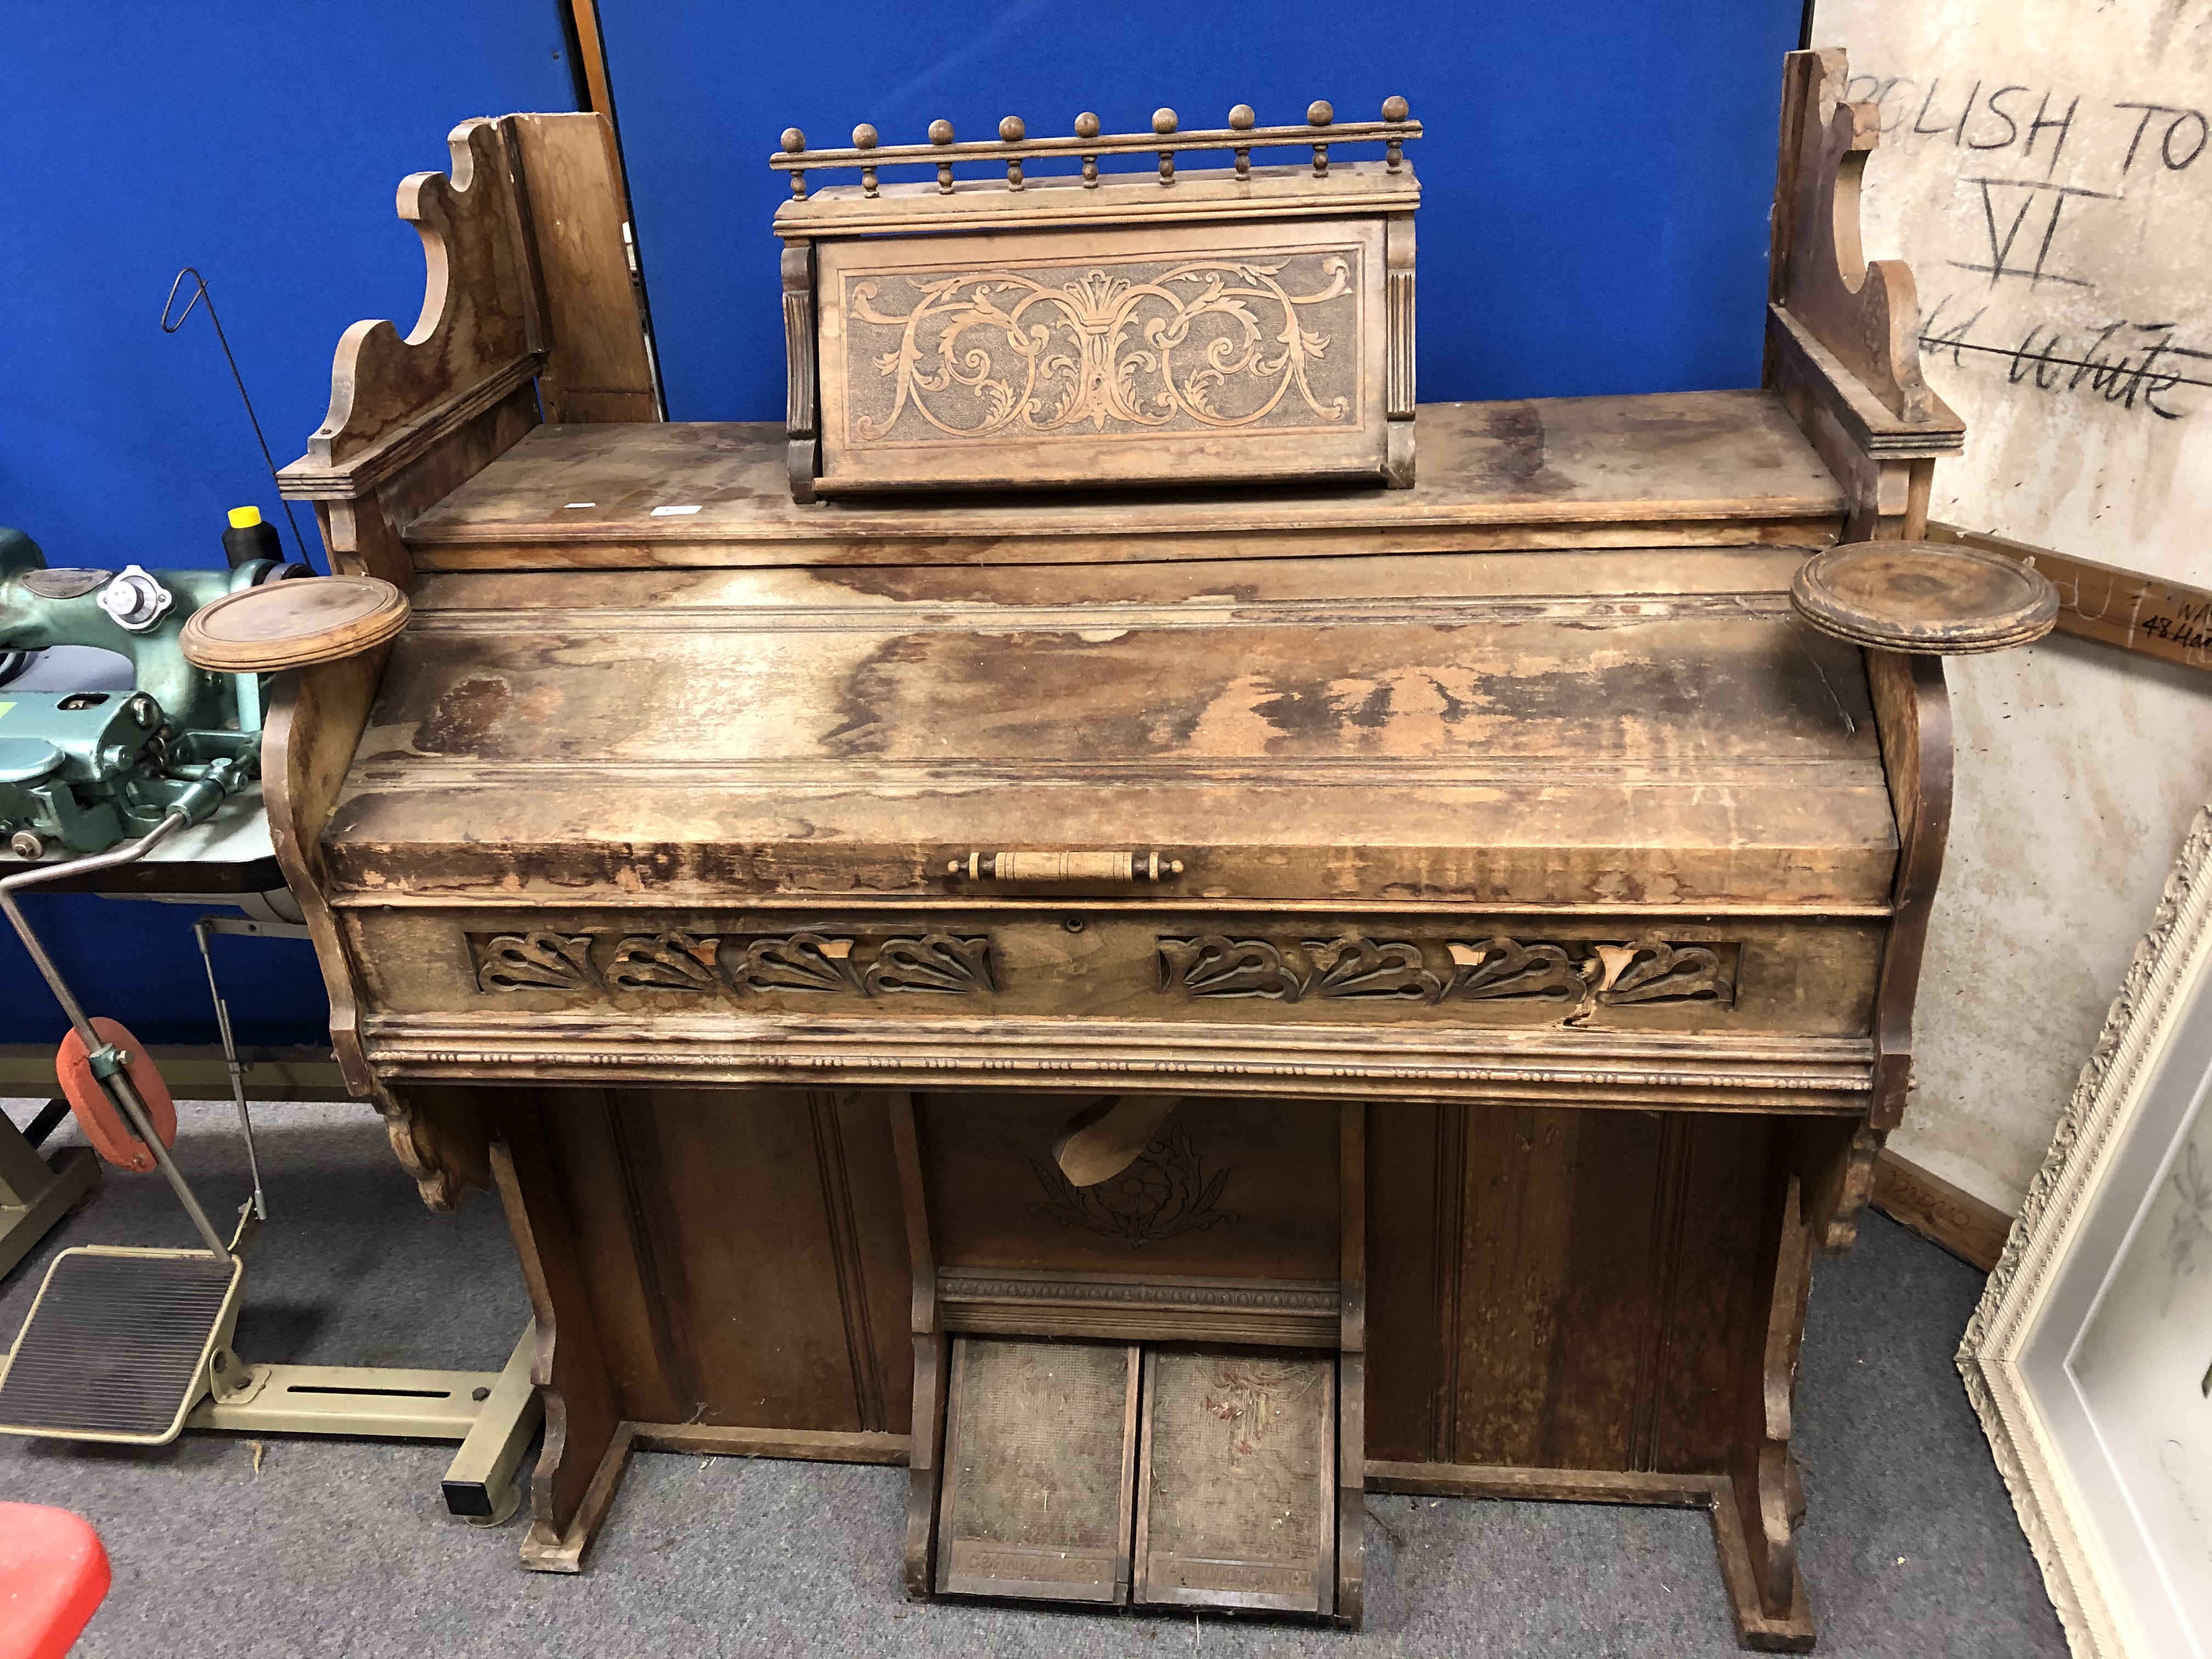 A Victorian pedal organ 120 cm width,